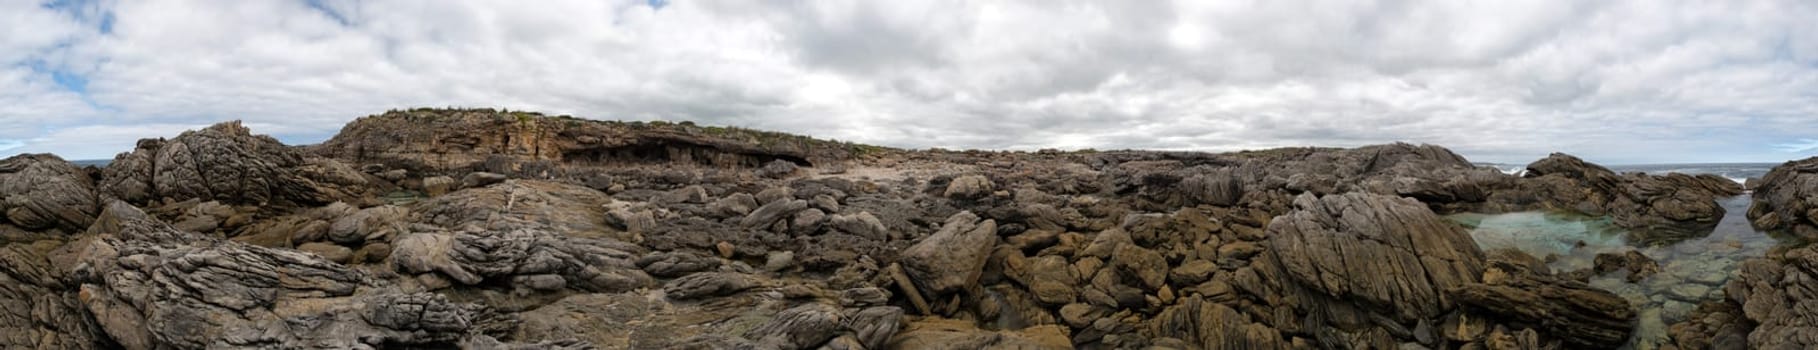 rocks of vivonne bay kangaroo island landscape